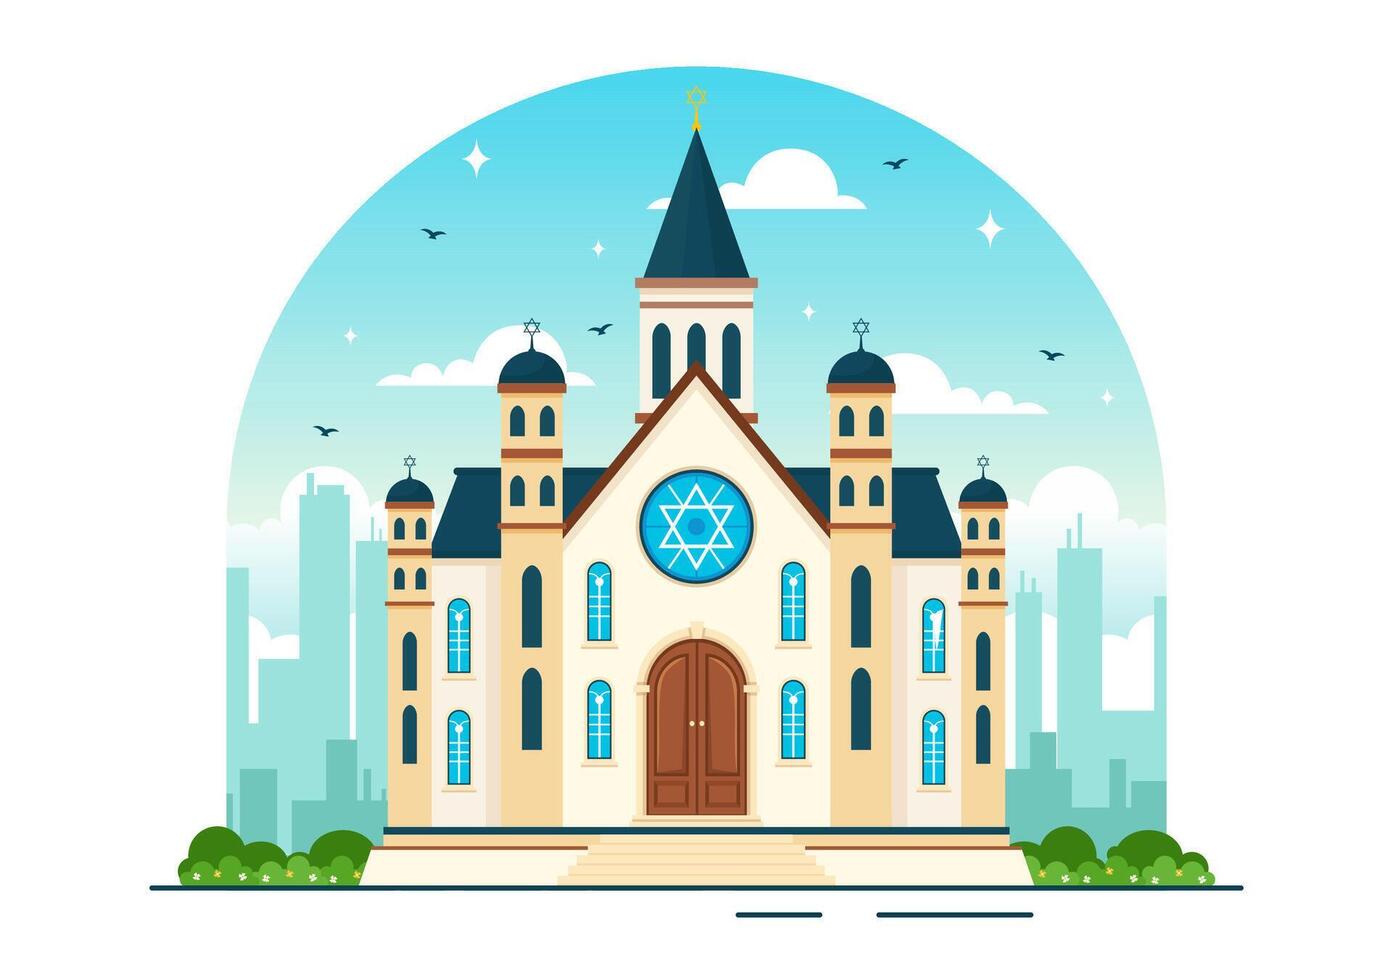 sinagoga edificio o judío templo vector ilustración con religioso, hebreo o judaísmo y judío Adoración sitio en plano dibujos animados antecedentes